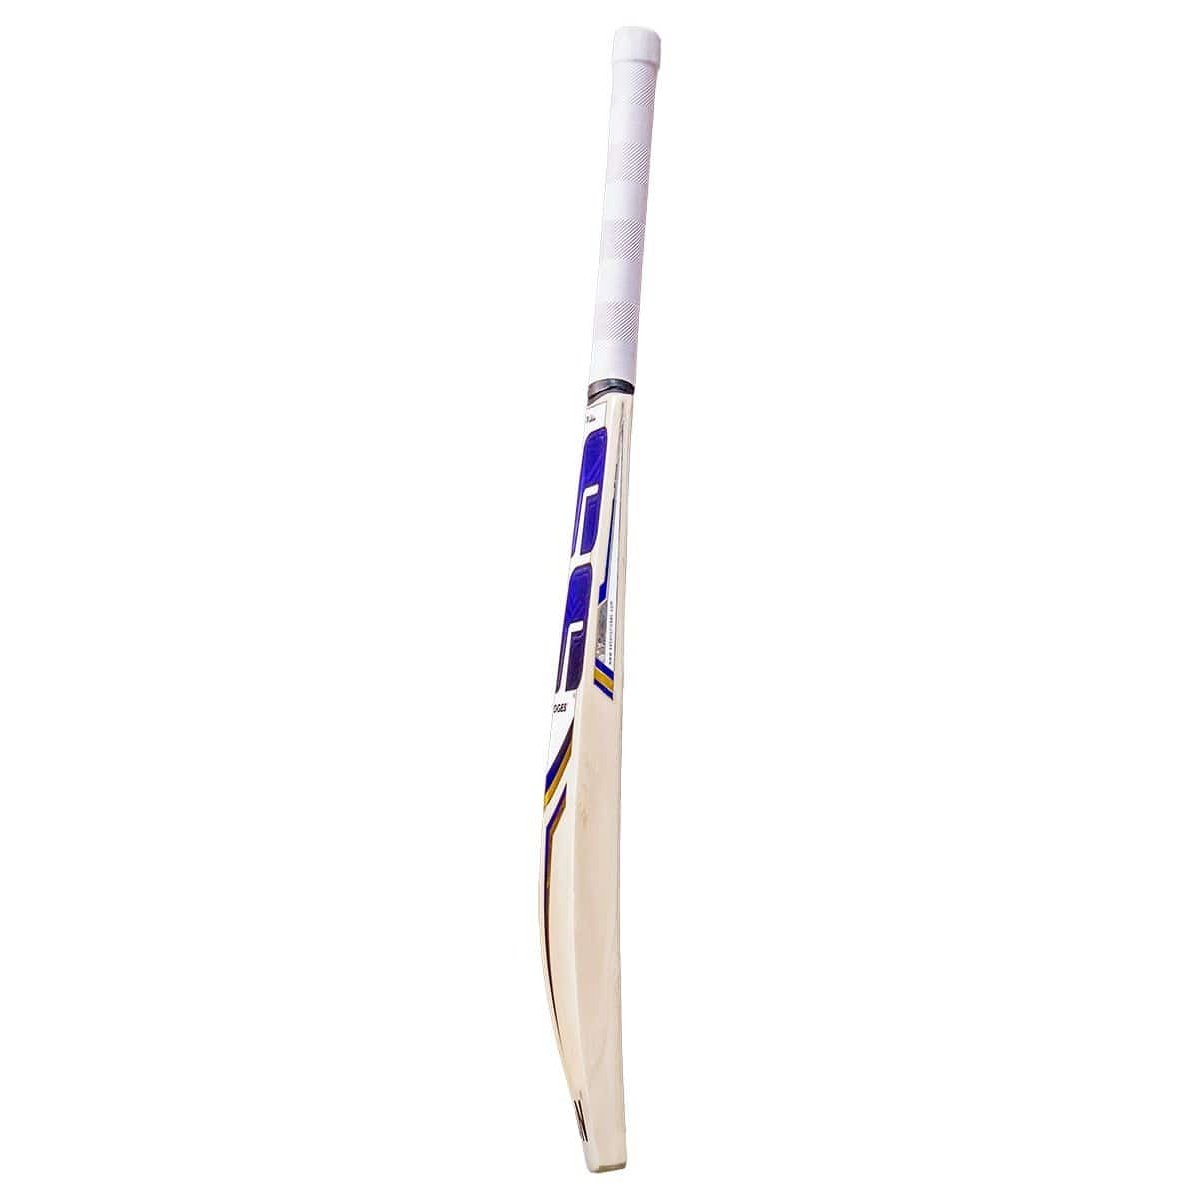 SS Cricket Bats Short Hand / Medium 2lbs 8oz - 2lbs 10oz SS Ton Players (Surya Yadav) Adult Cricket Bat